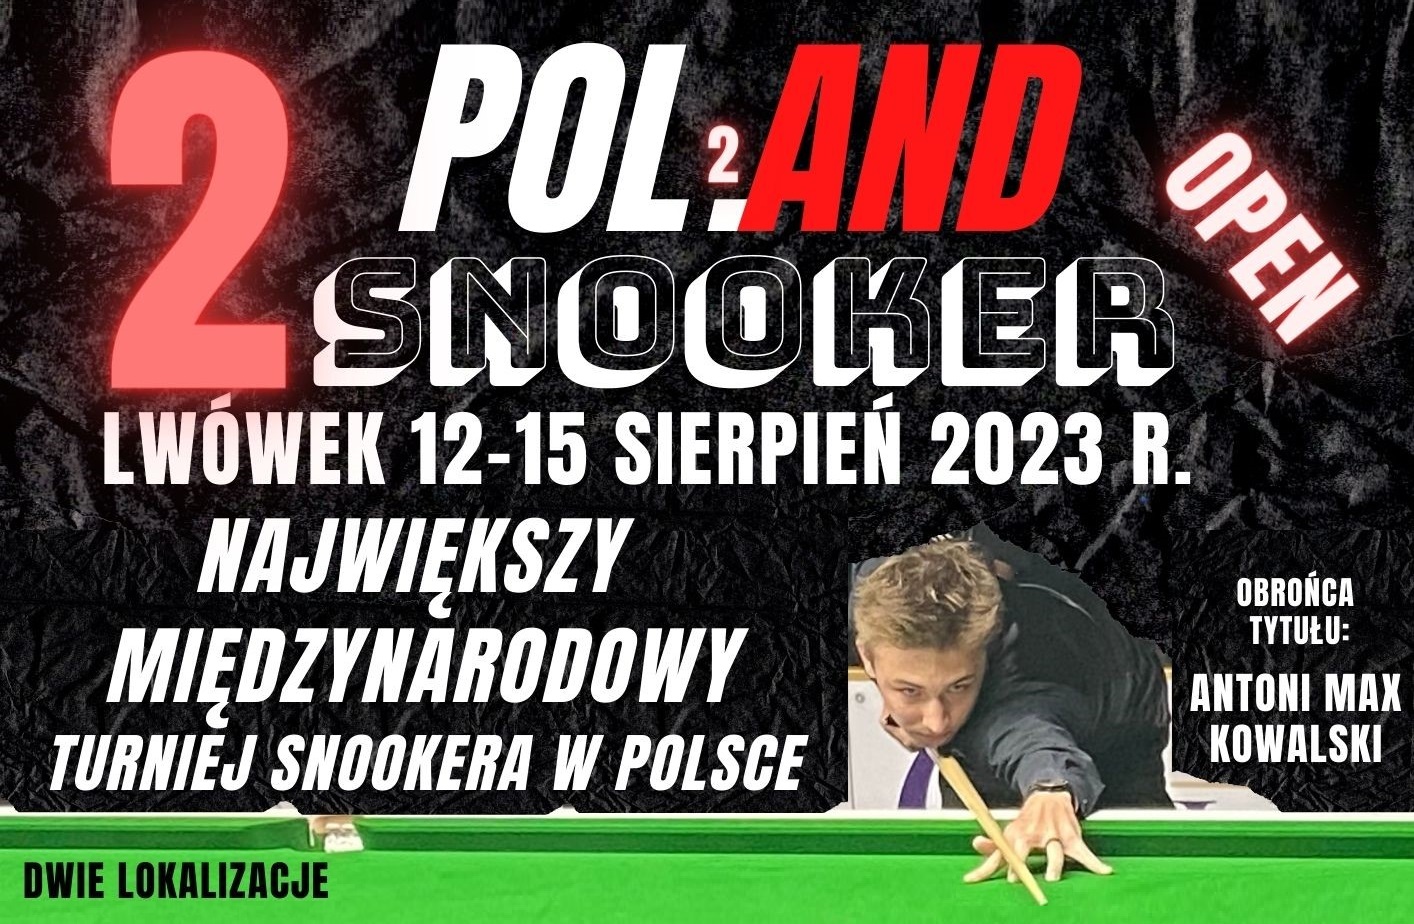 Plakat Pol.And Snooker 2023 r mini